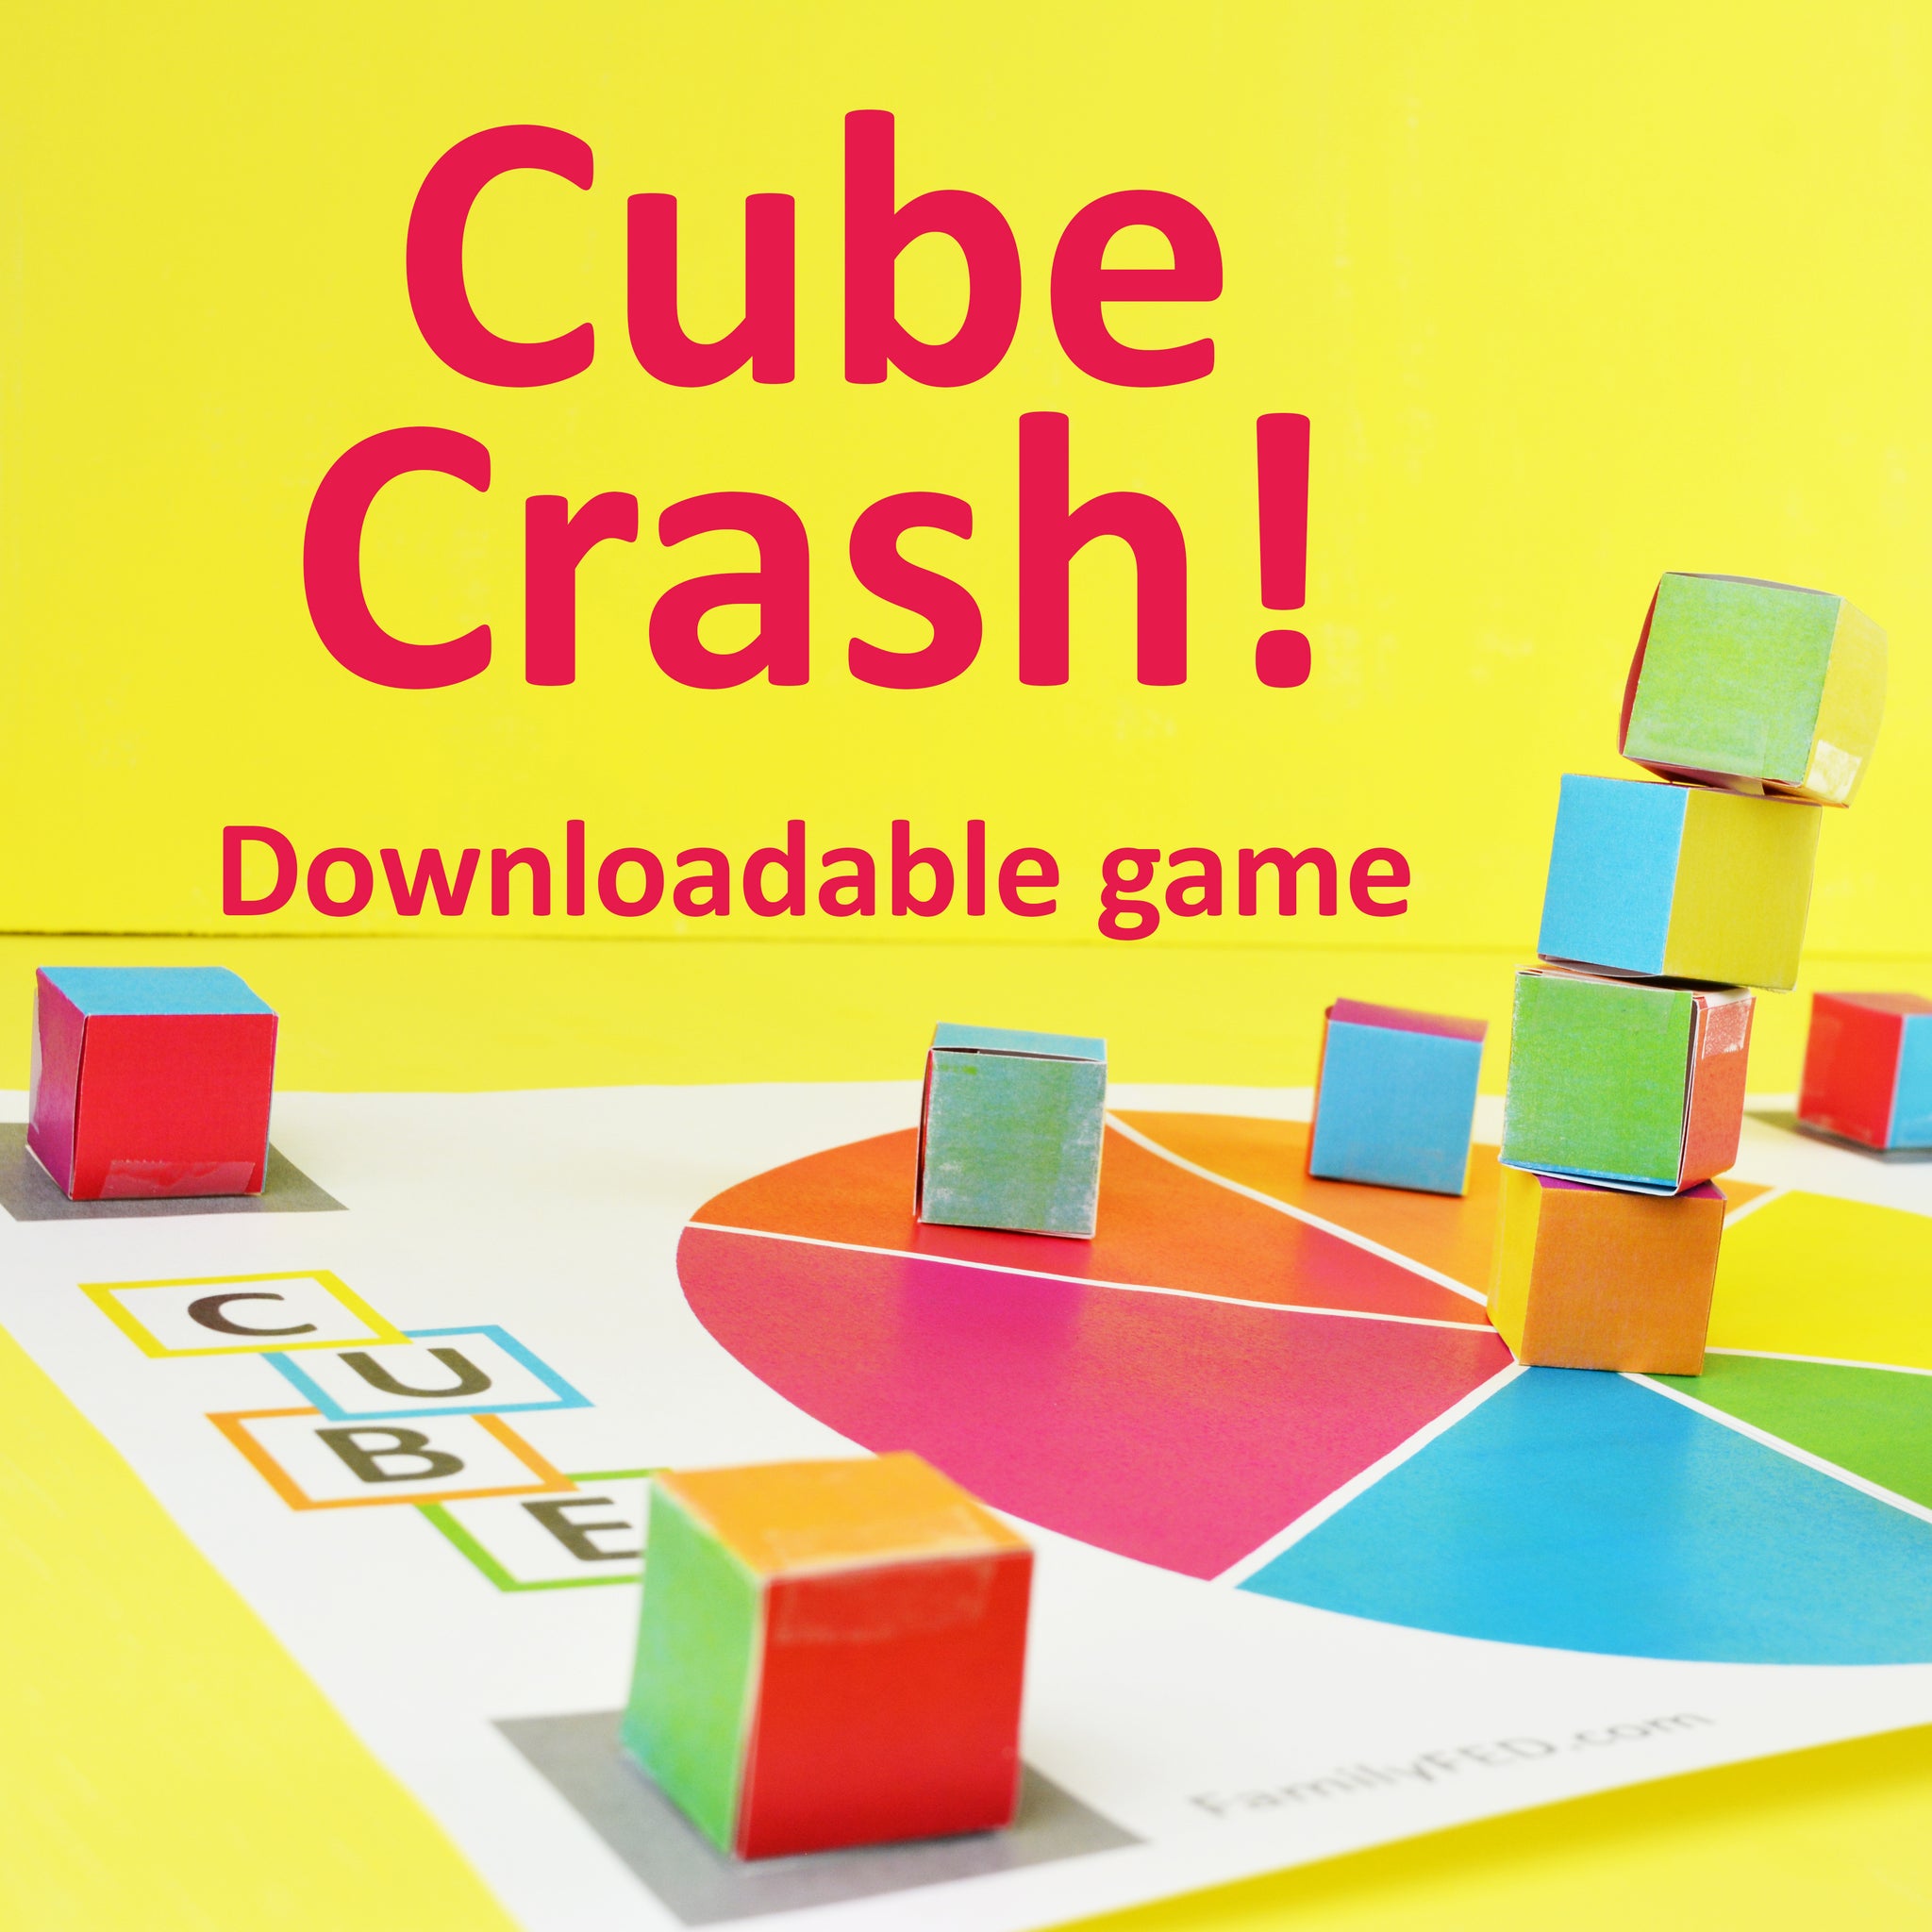 Cube Crash downloadable game